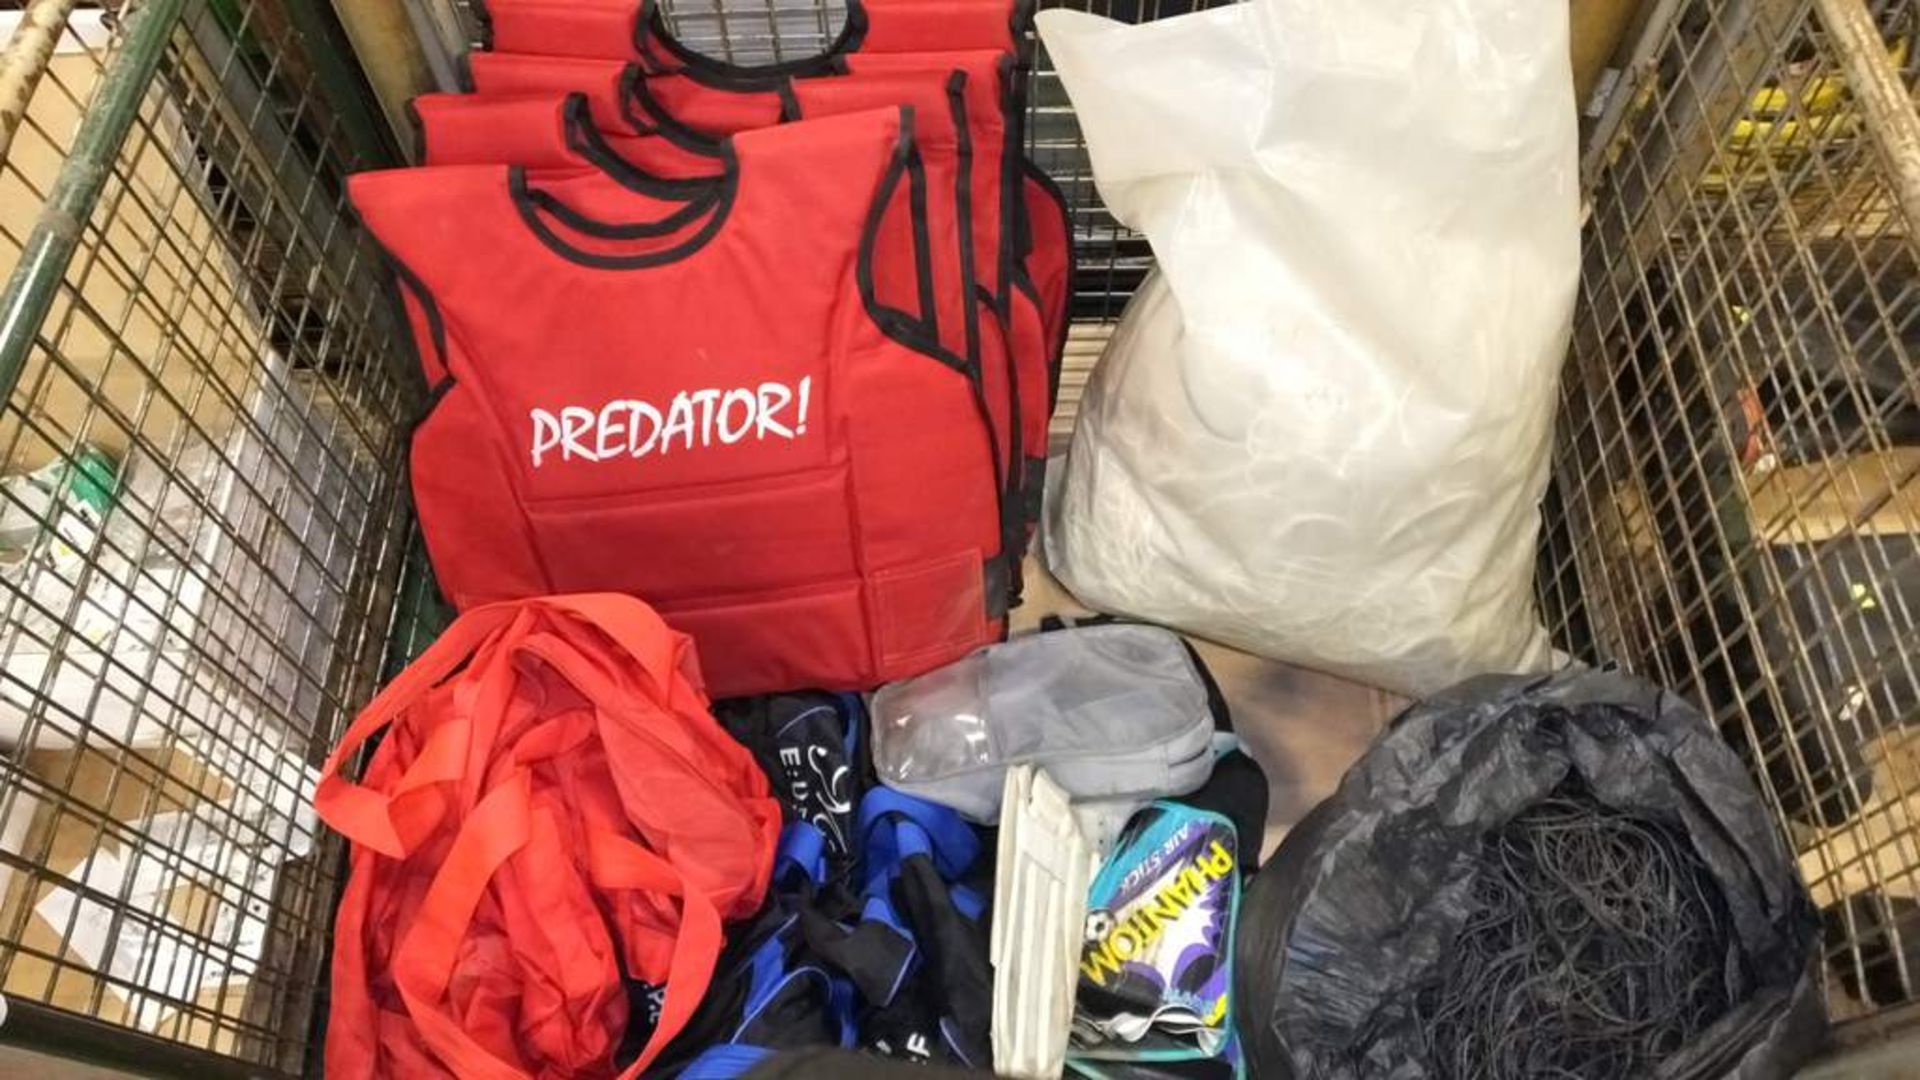 Various sporting equipment - Predator padded vests, sports bags & nets